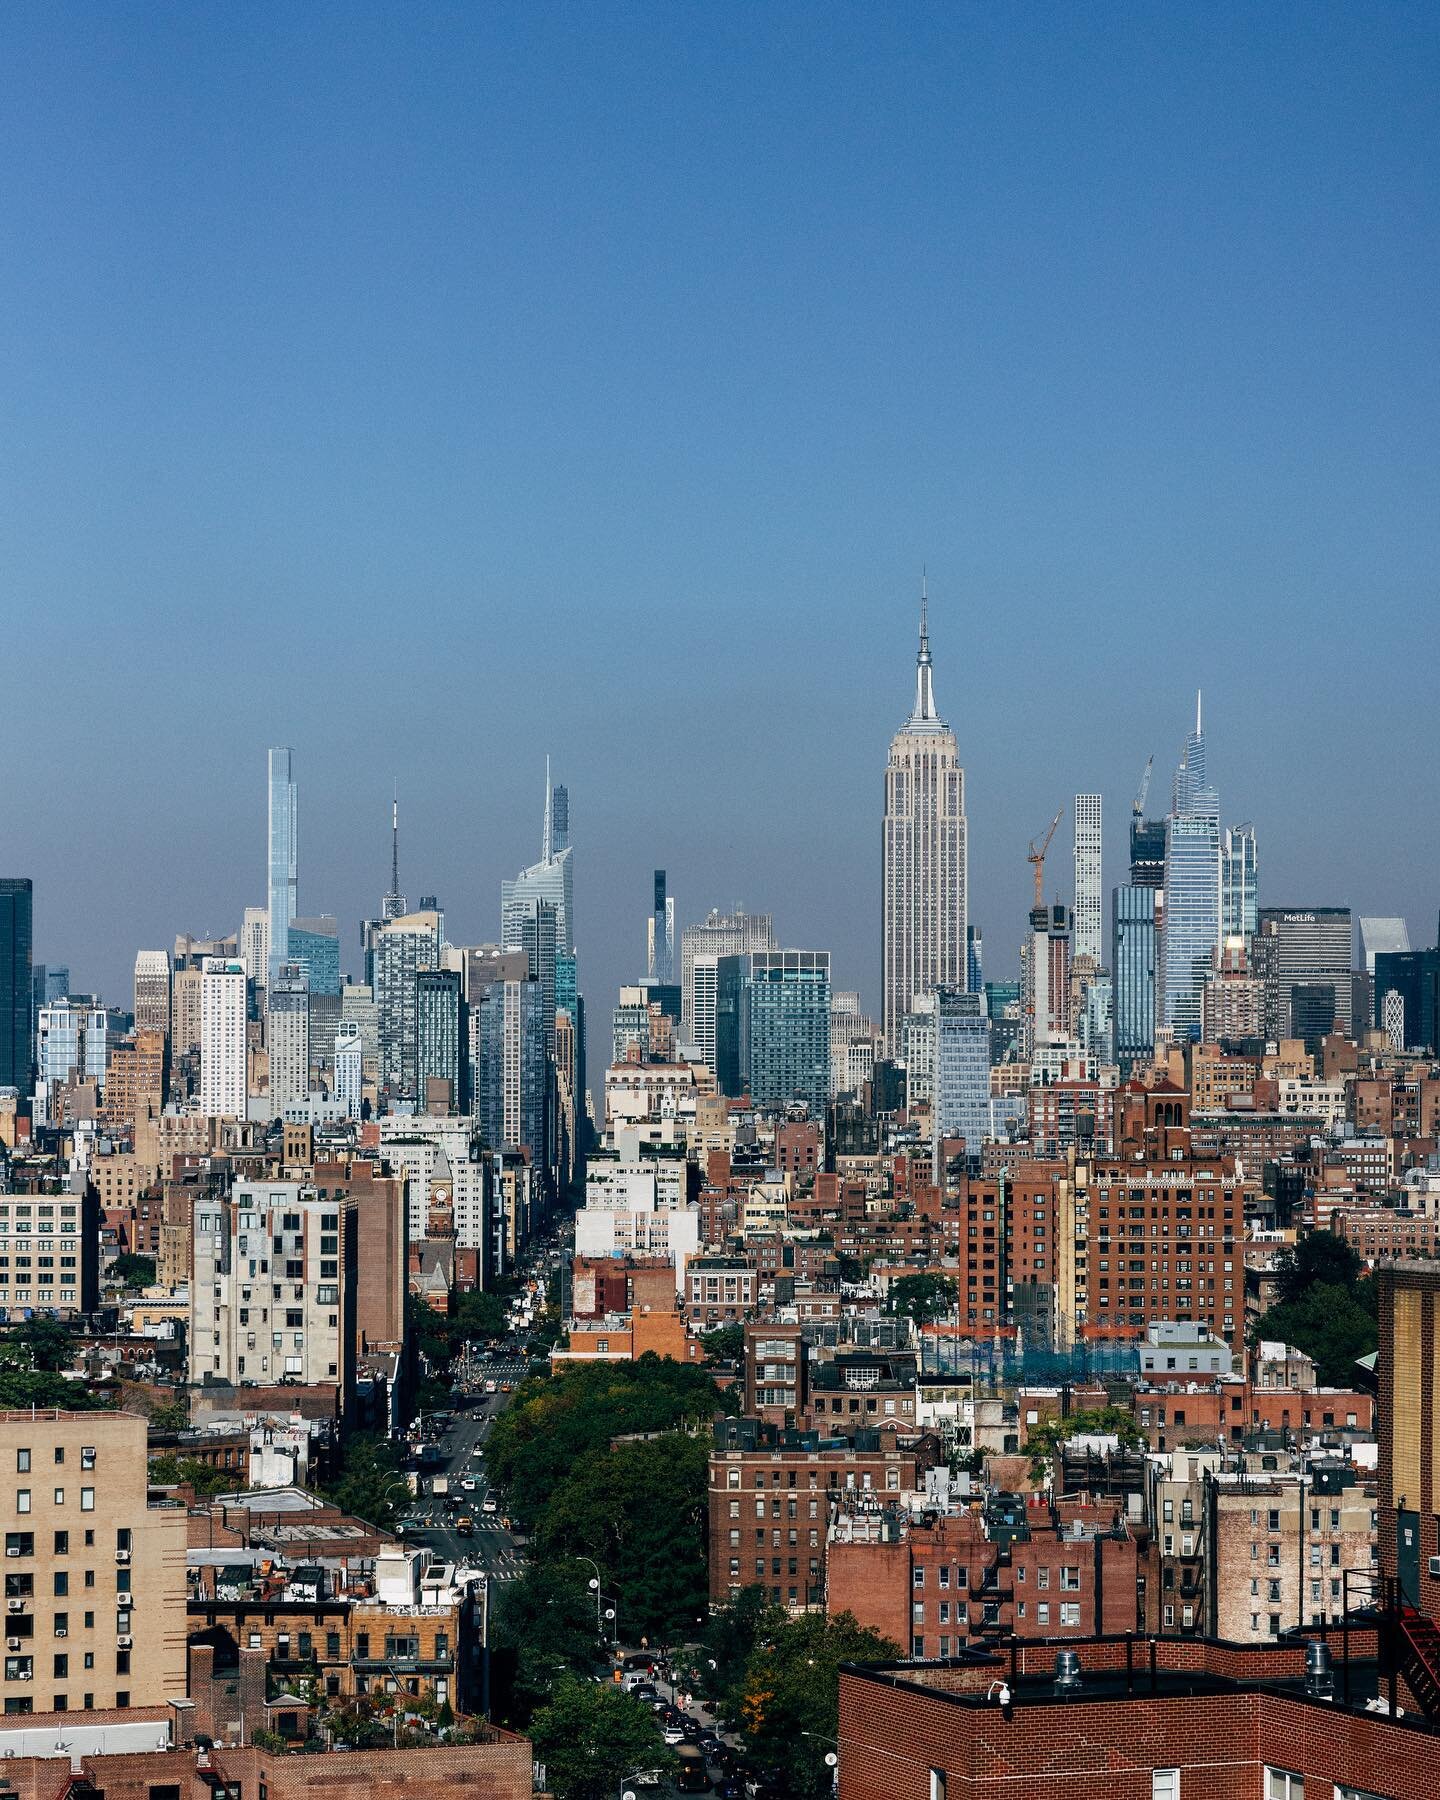 New York.

#canonr5 #digital #landscape #cityscape #newyork #manhattan